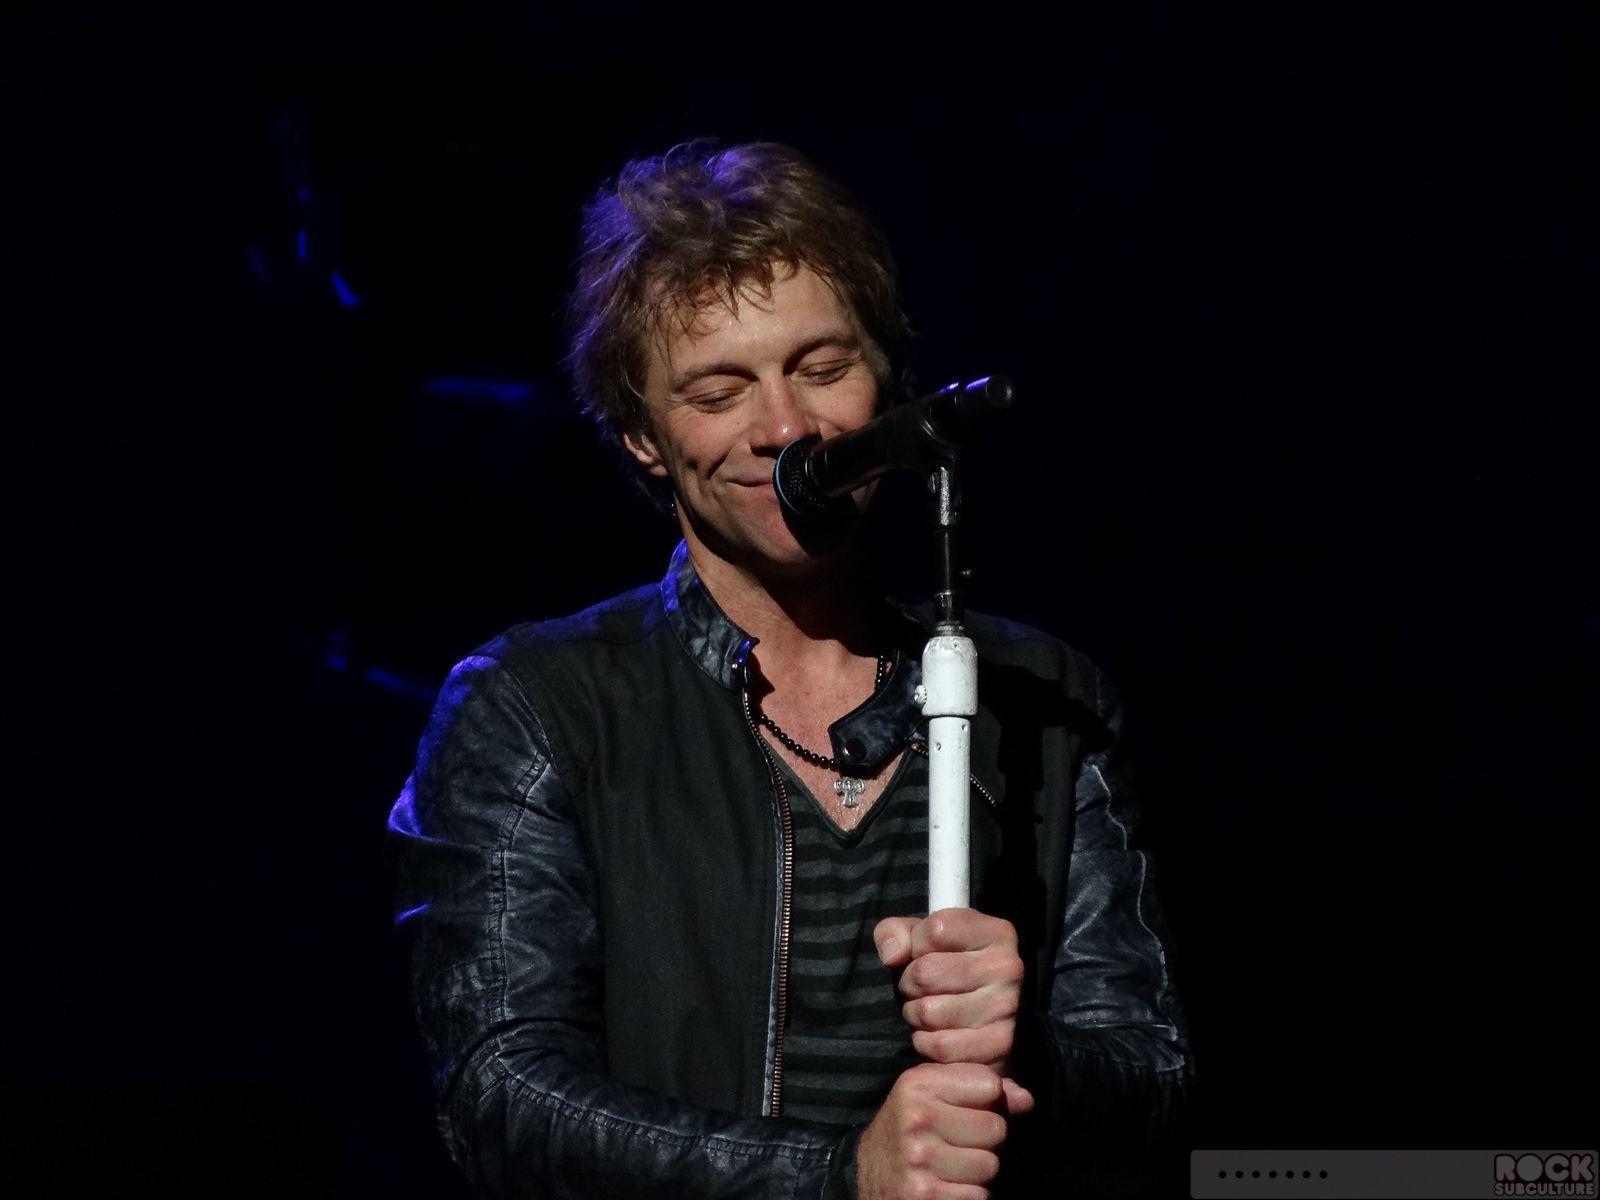 Bon Jovi “Because We Can Tour” at HP Pavilion. San Jose